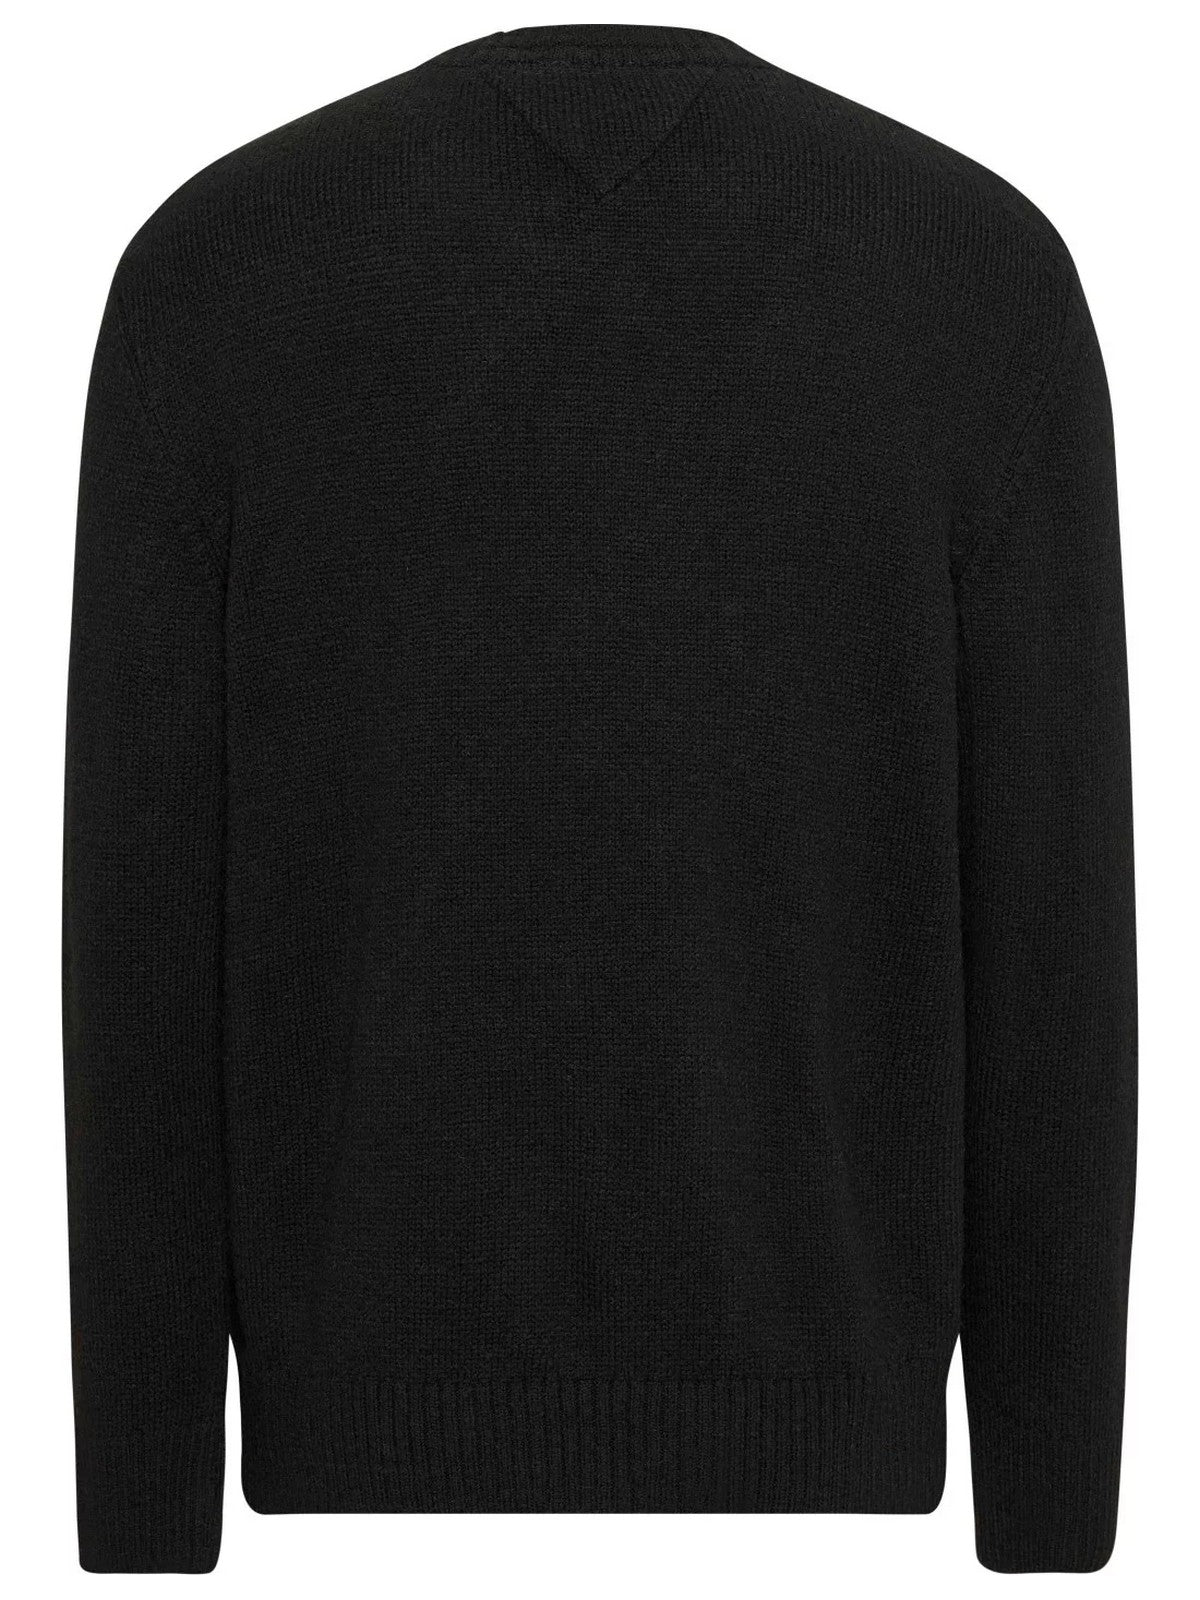 TOMMY HILFIGER Hommes Sweatshirt DM0DM17758 BDS Noir